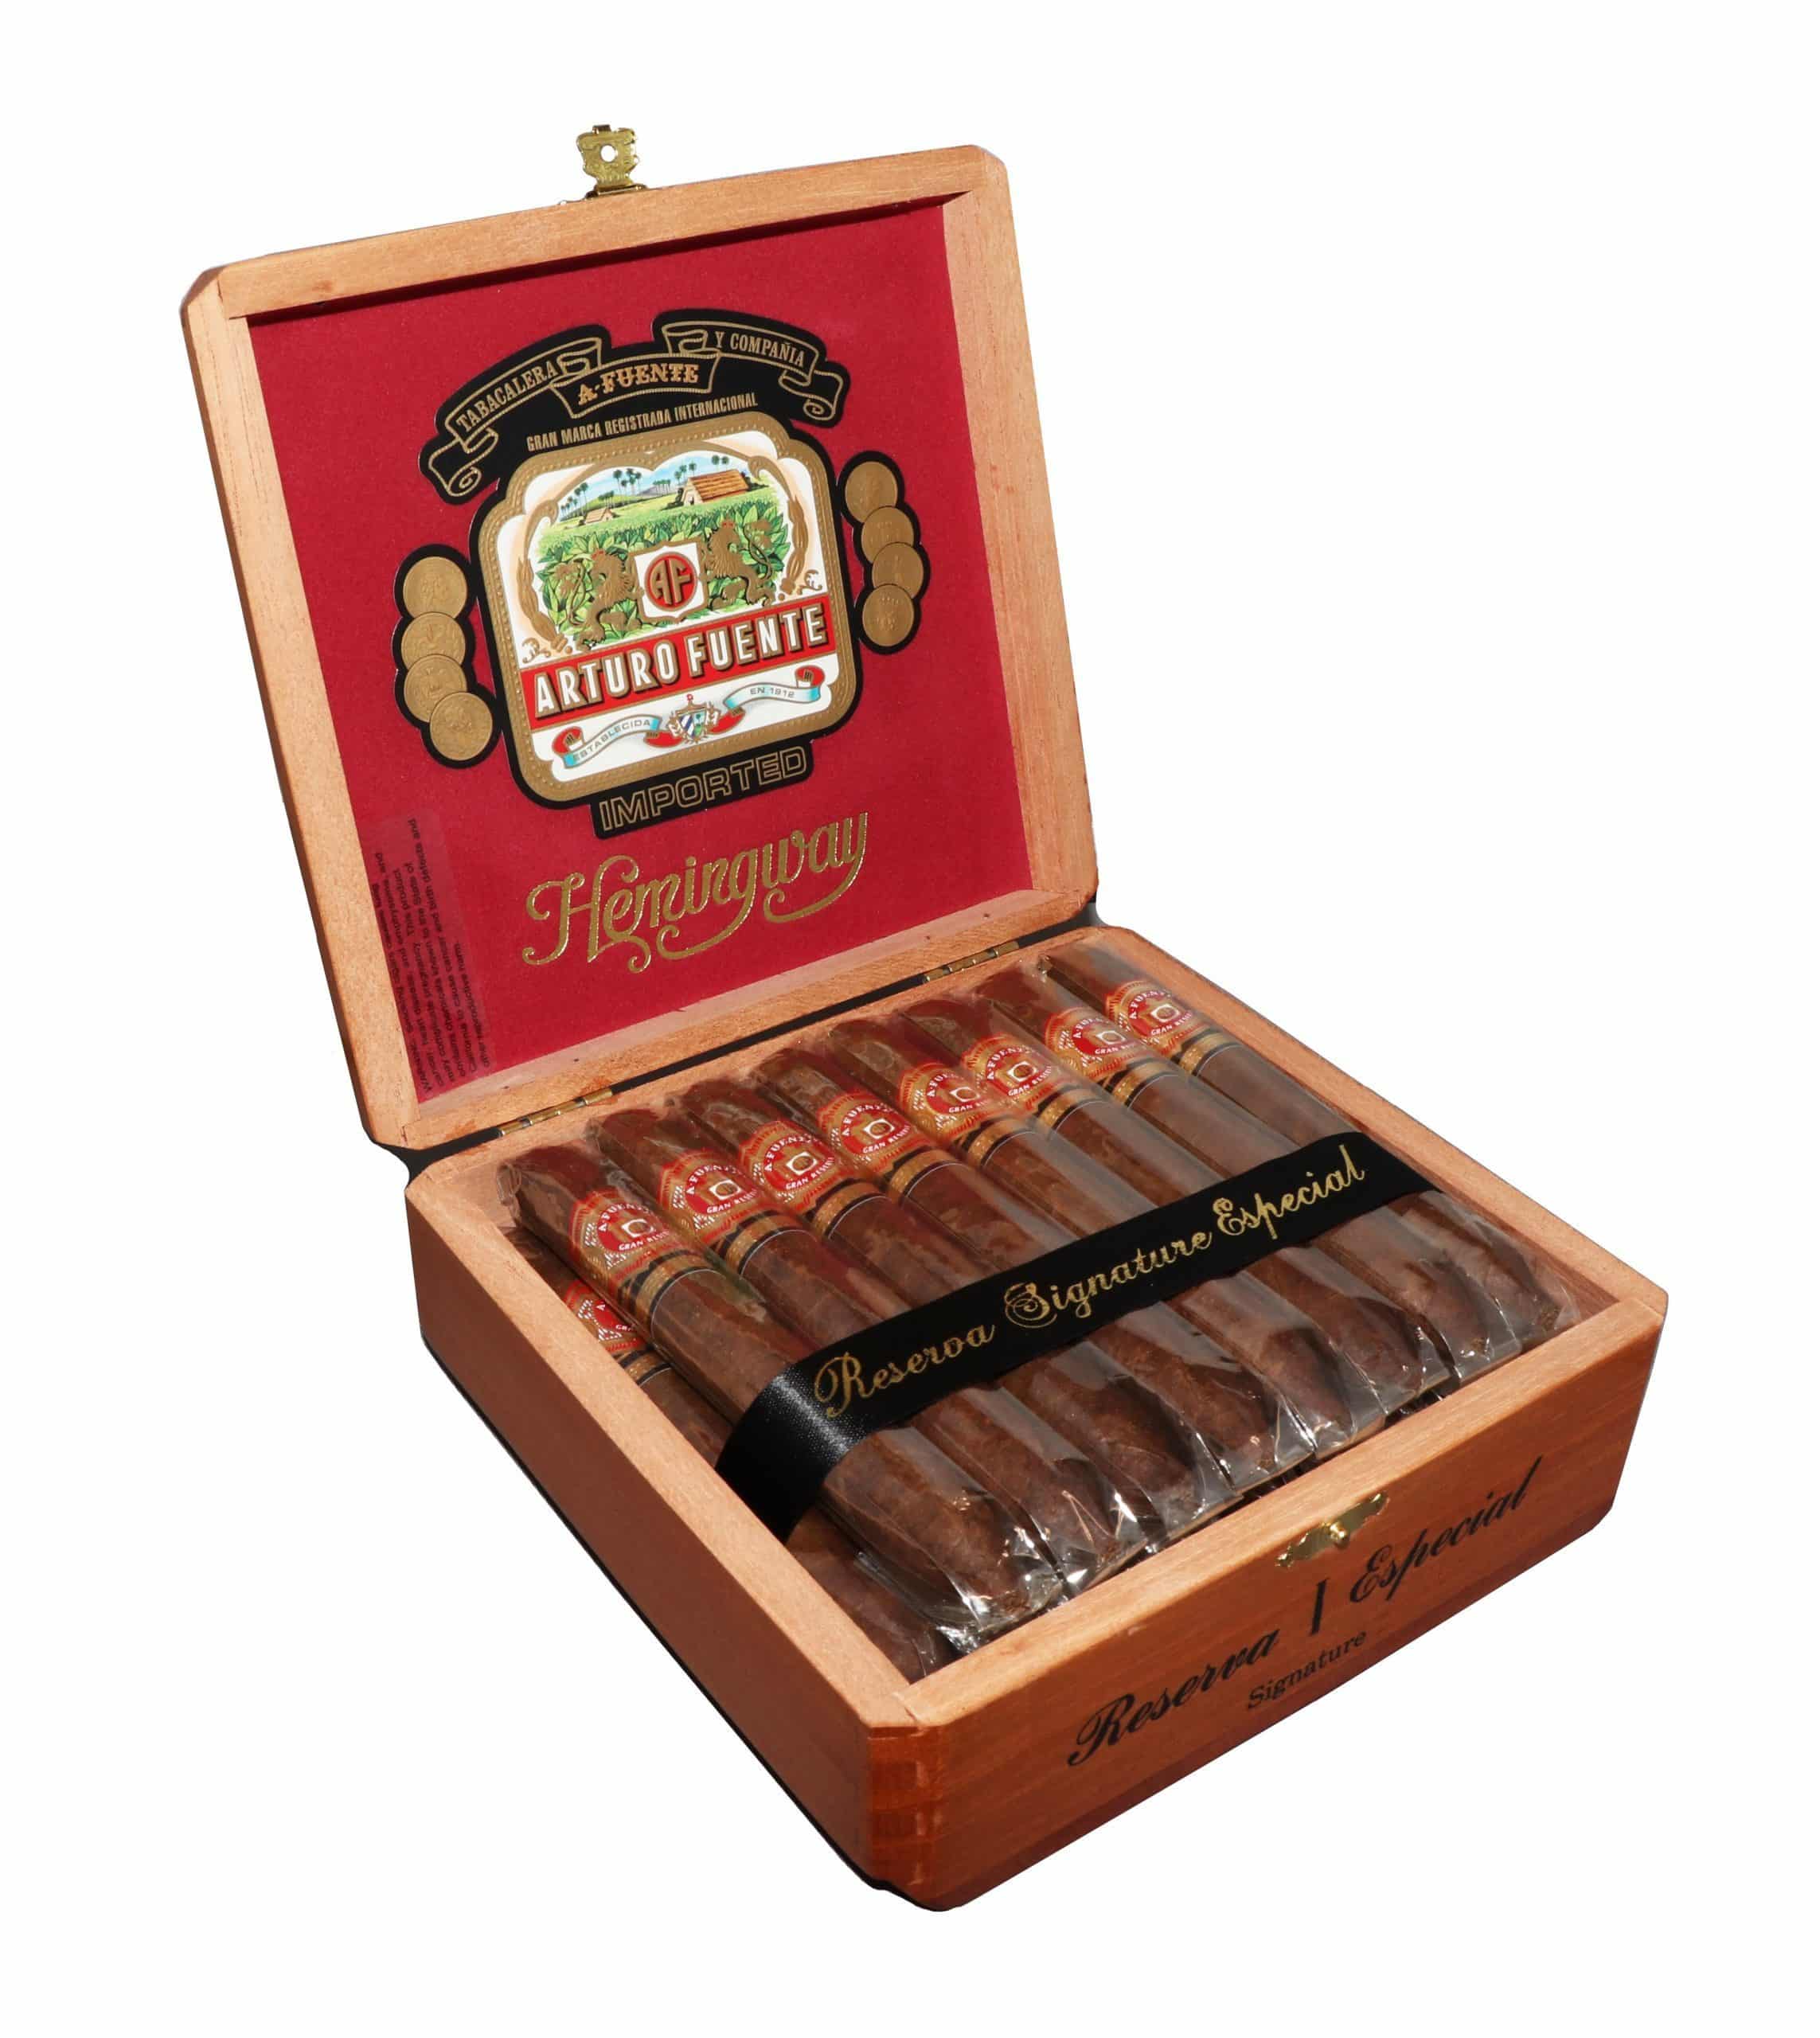 Open box of 25 count Arturo Fuente Hemingway Signature cigars